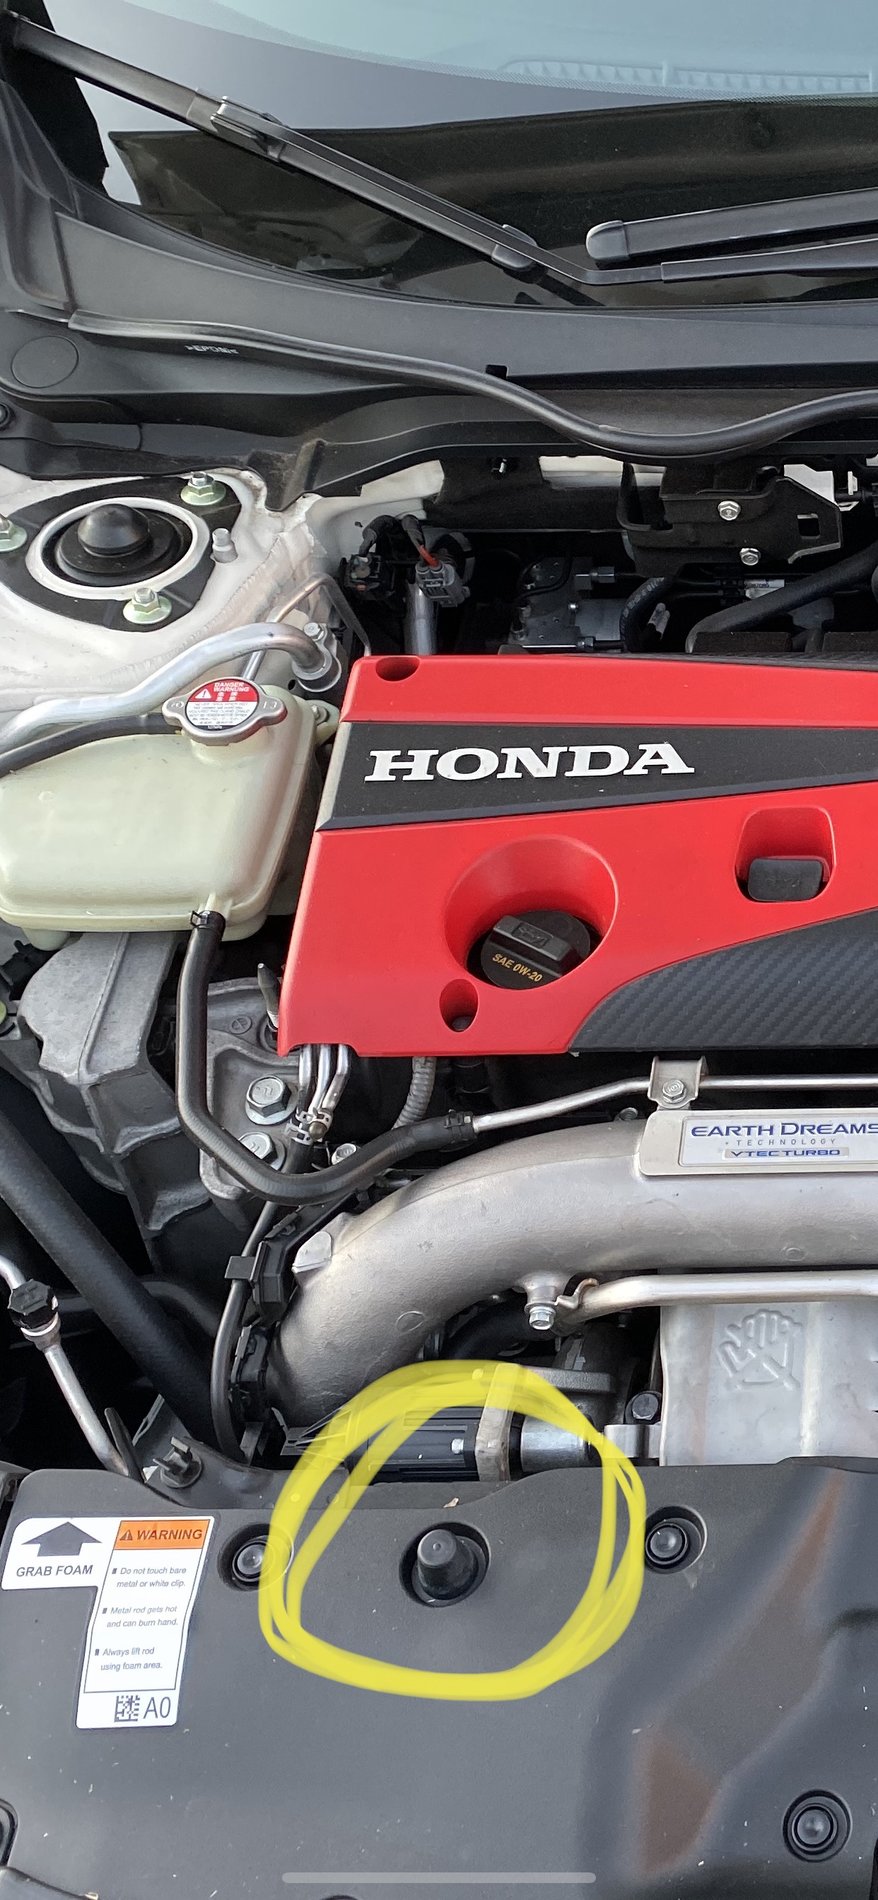 Honda Civic 10th gen Part Number for hood boot? FFA00DAC-F3E7-4F19-995E-E2C08DA2257F